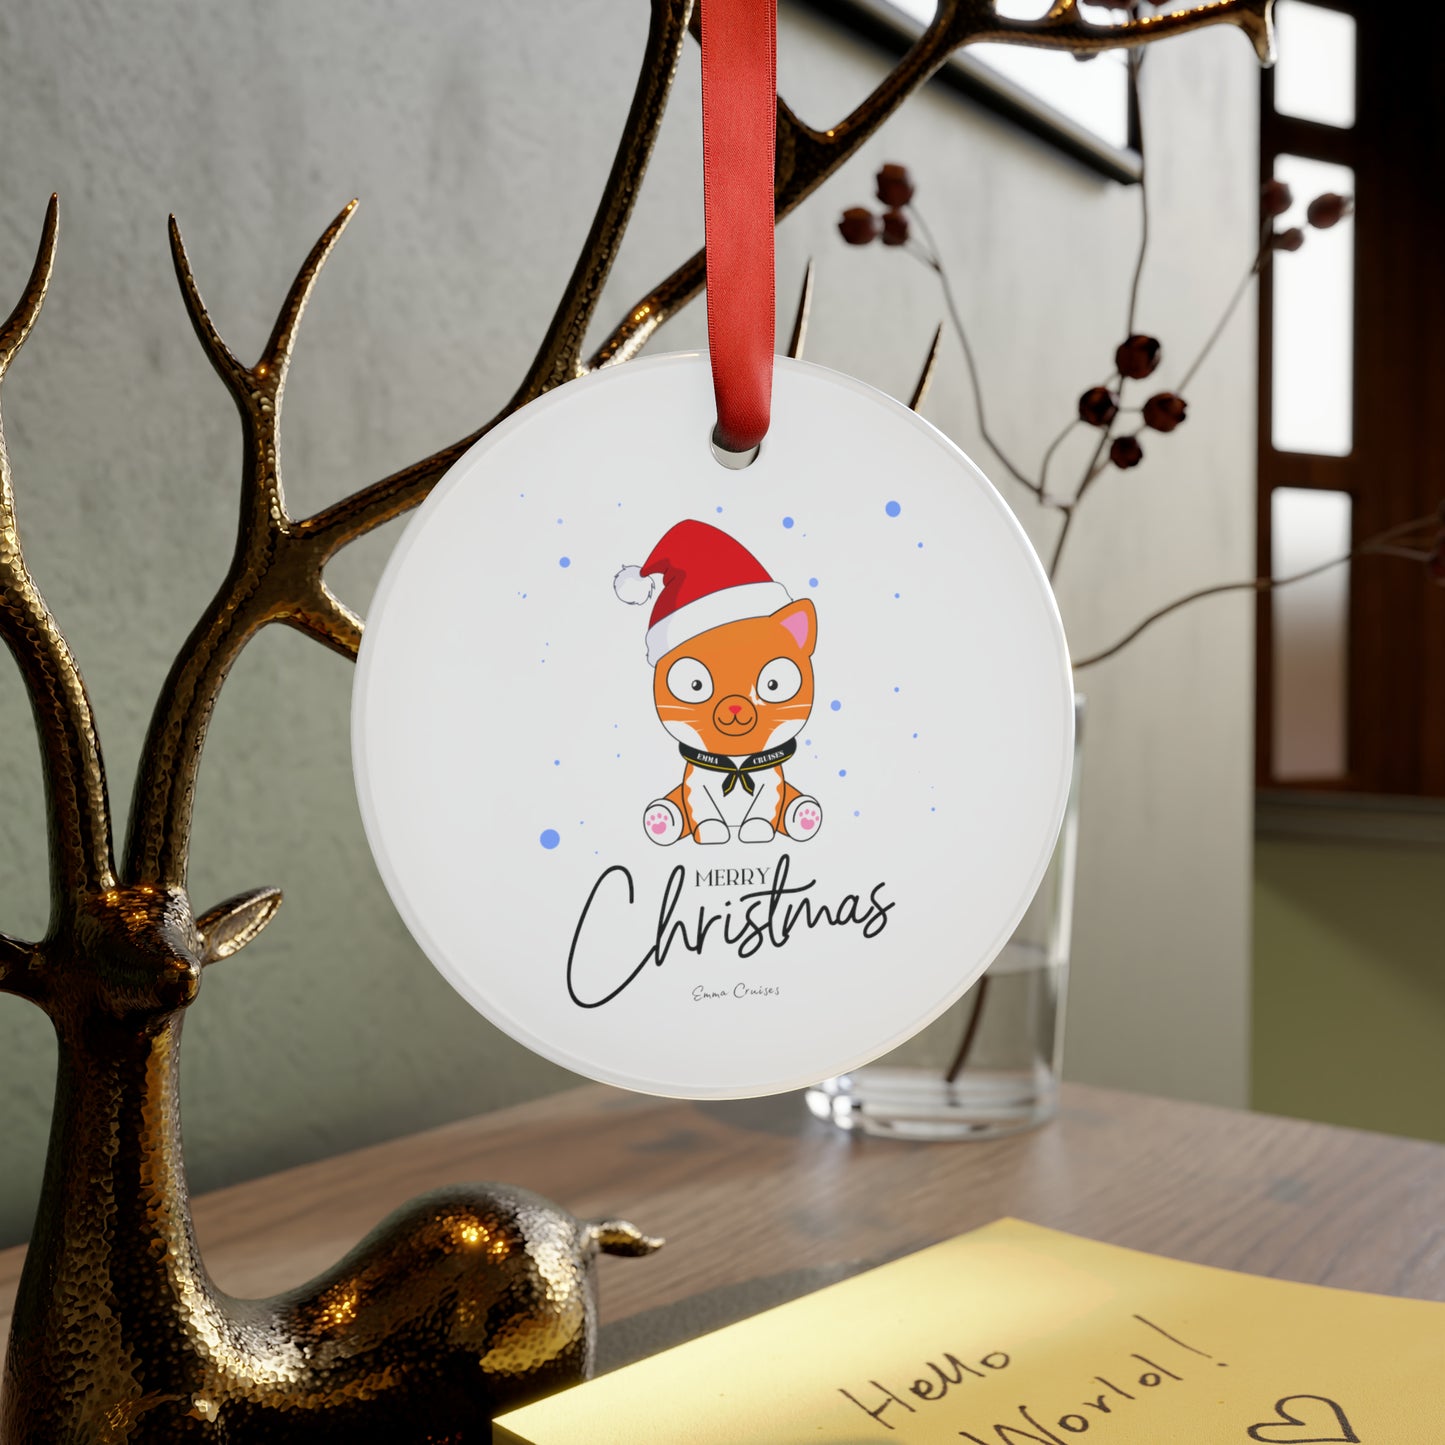 Merry Christmas - Christmas Ornament